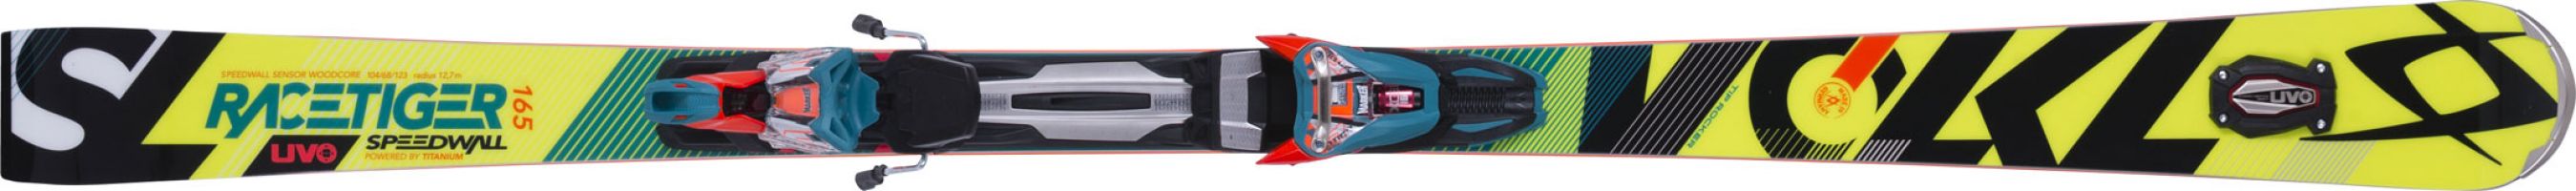 Sci volkl' Racetiger Speedwall SL UVO